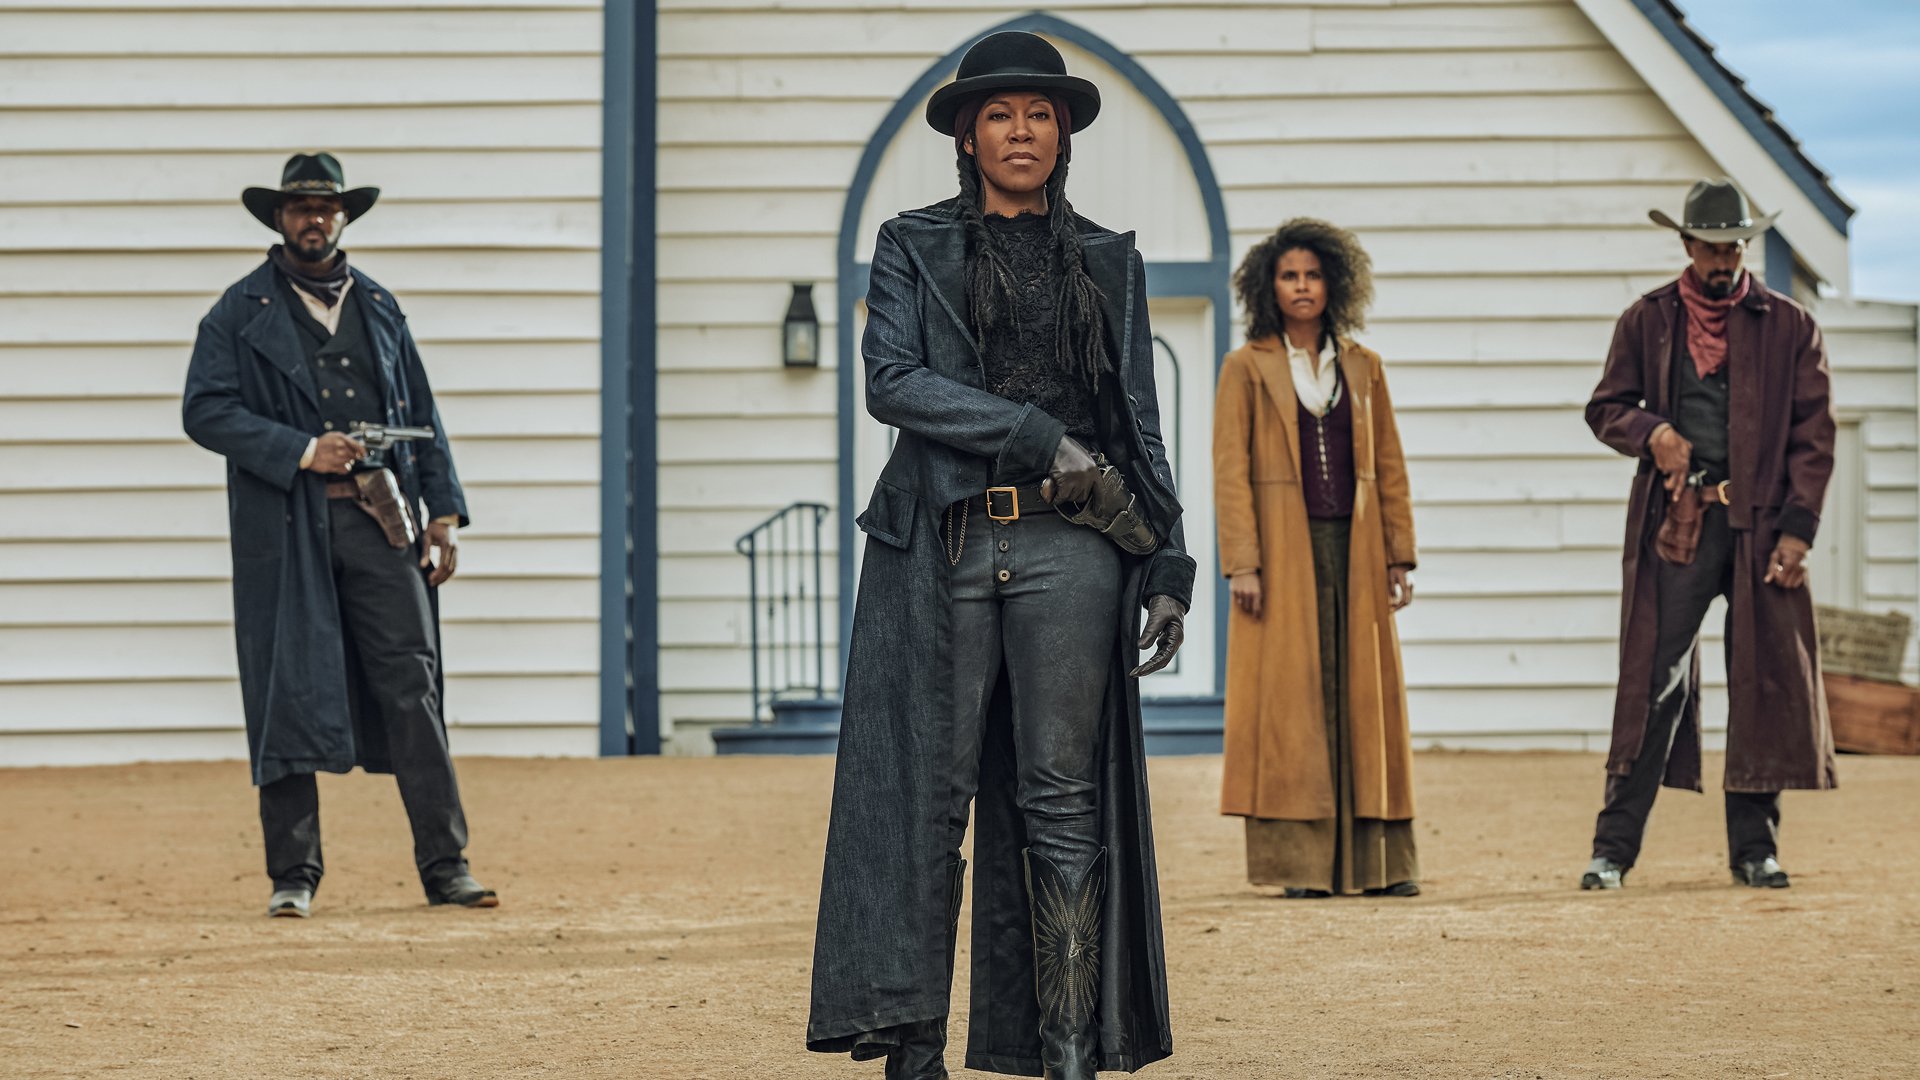 J.T. Holt, Regina King, Zazie Beetz, and Justin Clarke stand in a Western set in costume.